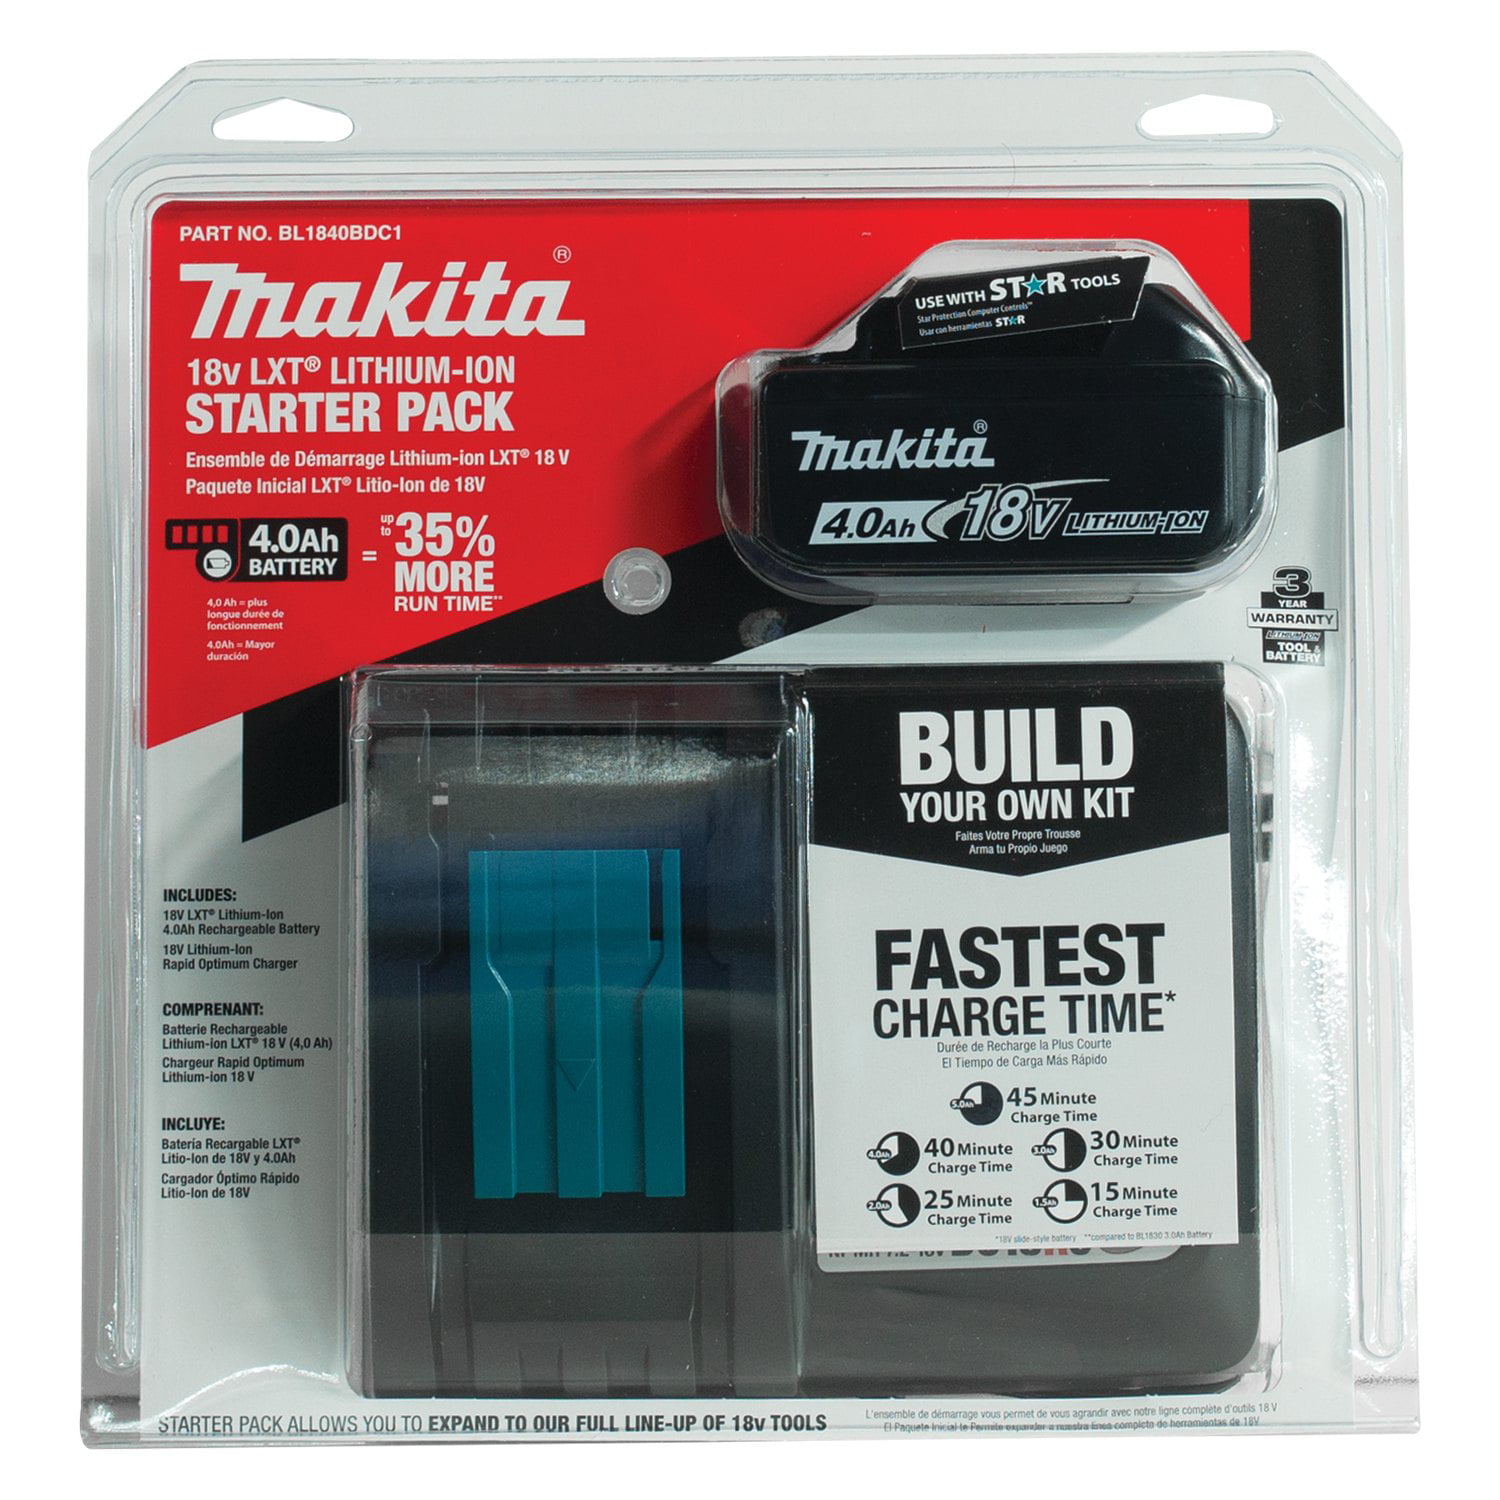 Integration bekymre afbalanceret Makita 18V 2.0Ah Compact Lithium-Ion Battery and Charger Kit BL1820BDC1 -  Walmart.com